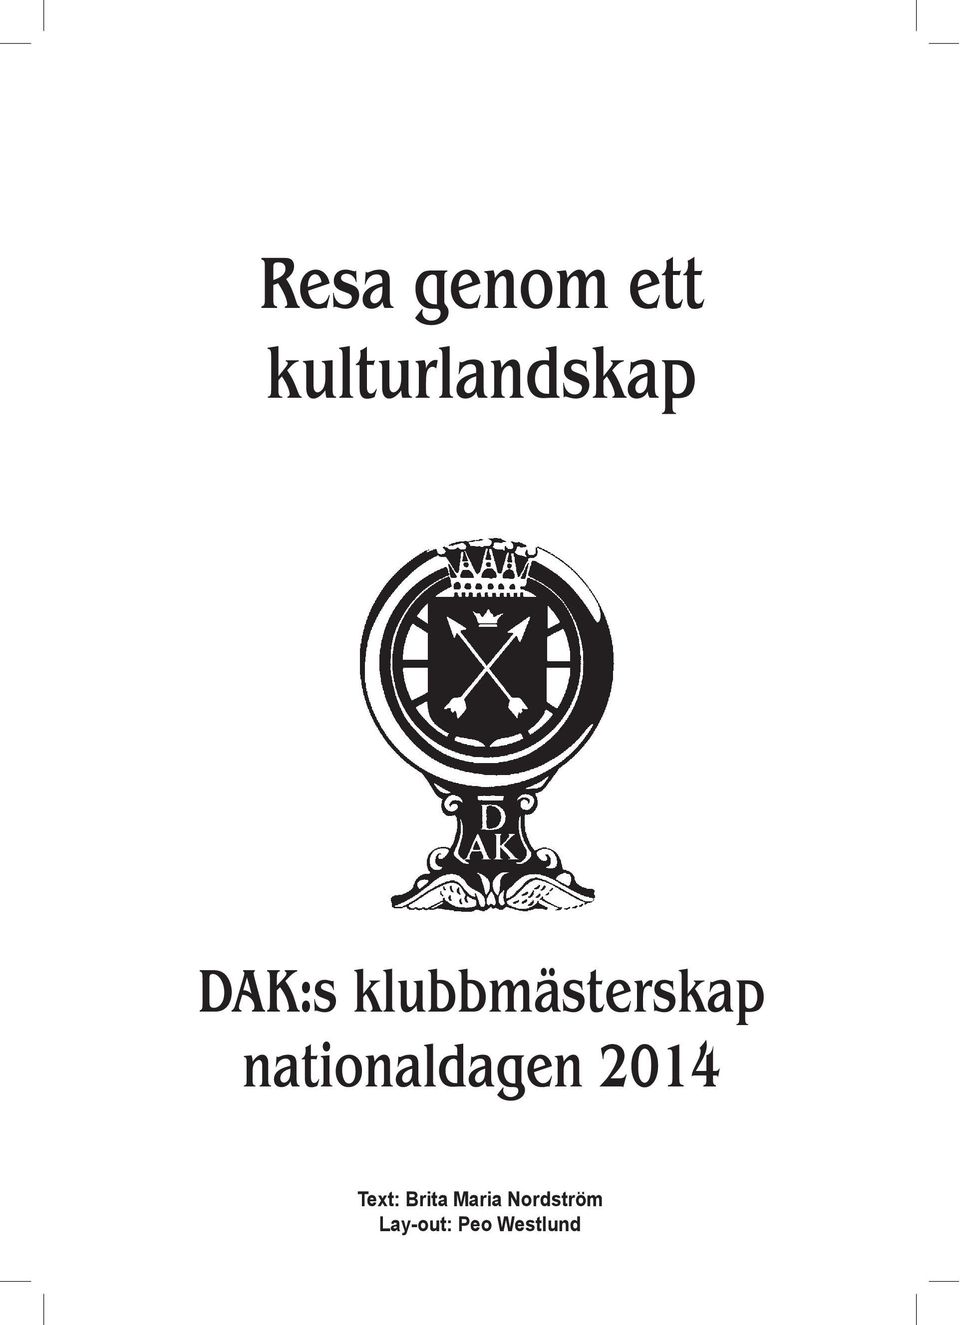 nationaldagen 2014 Text: